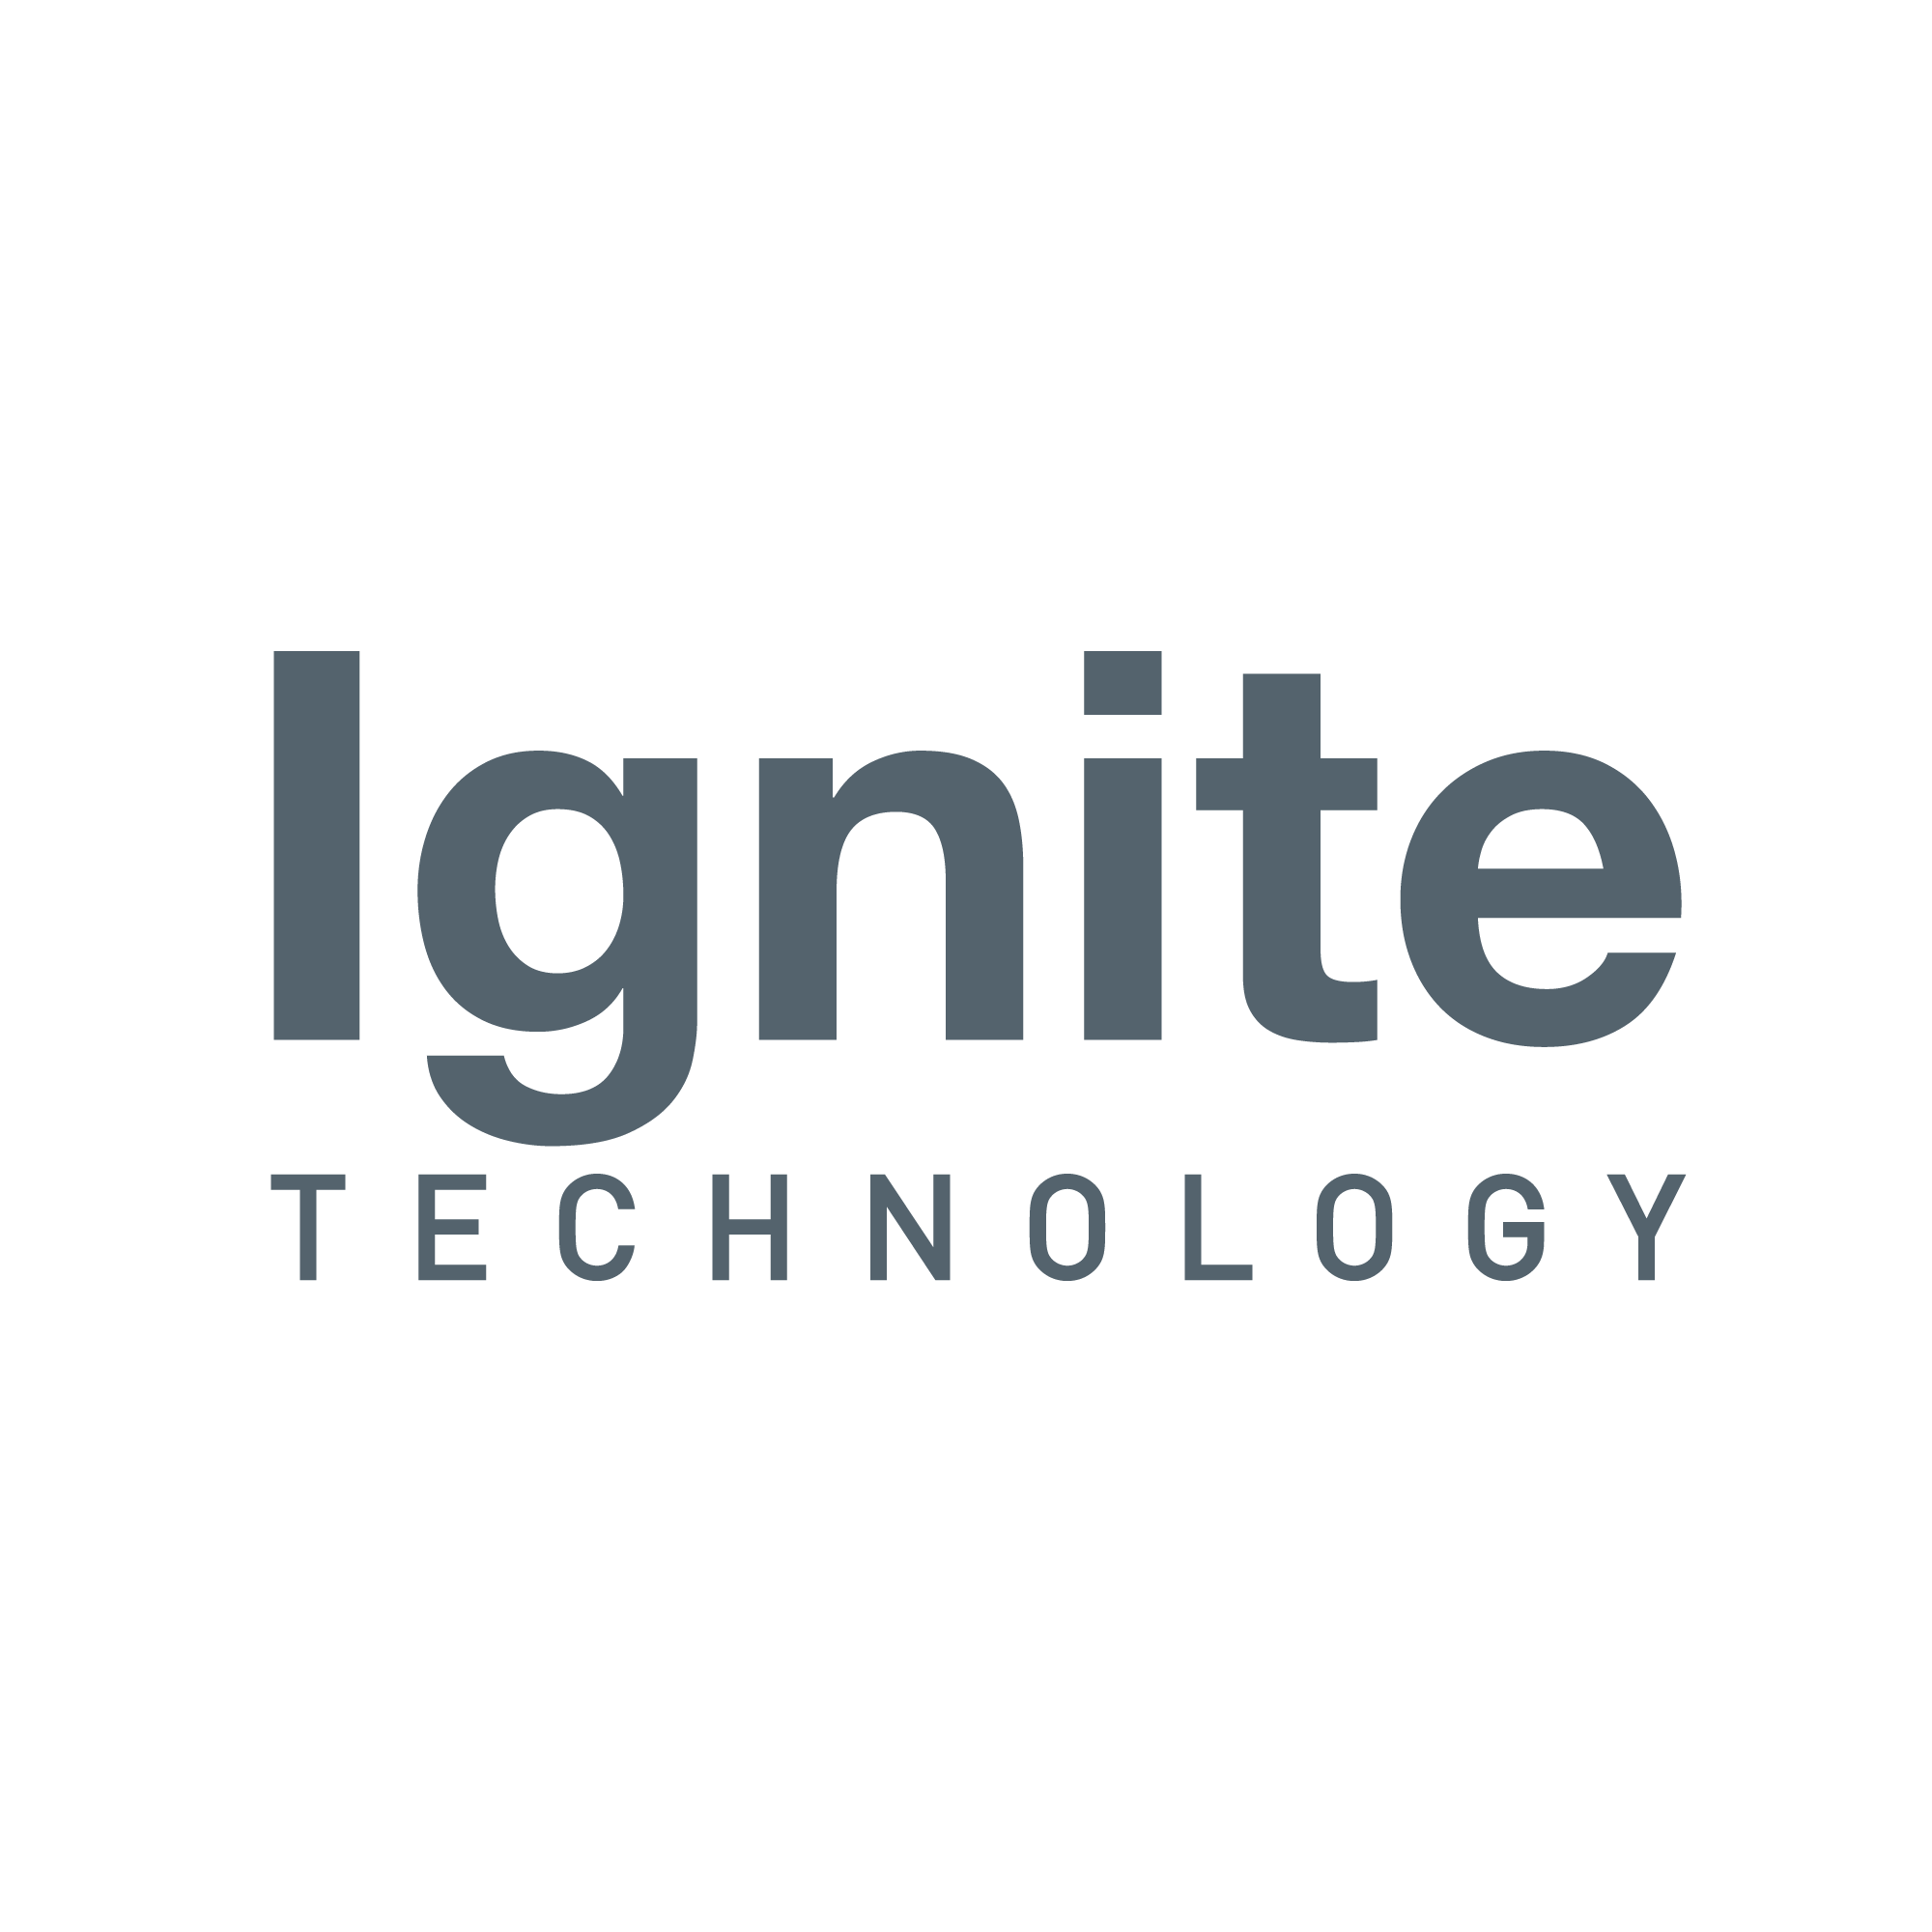 Ignite Technology marketing case study Interalia Marketing